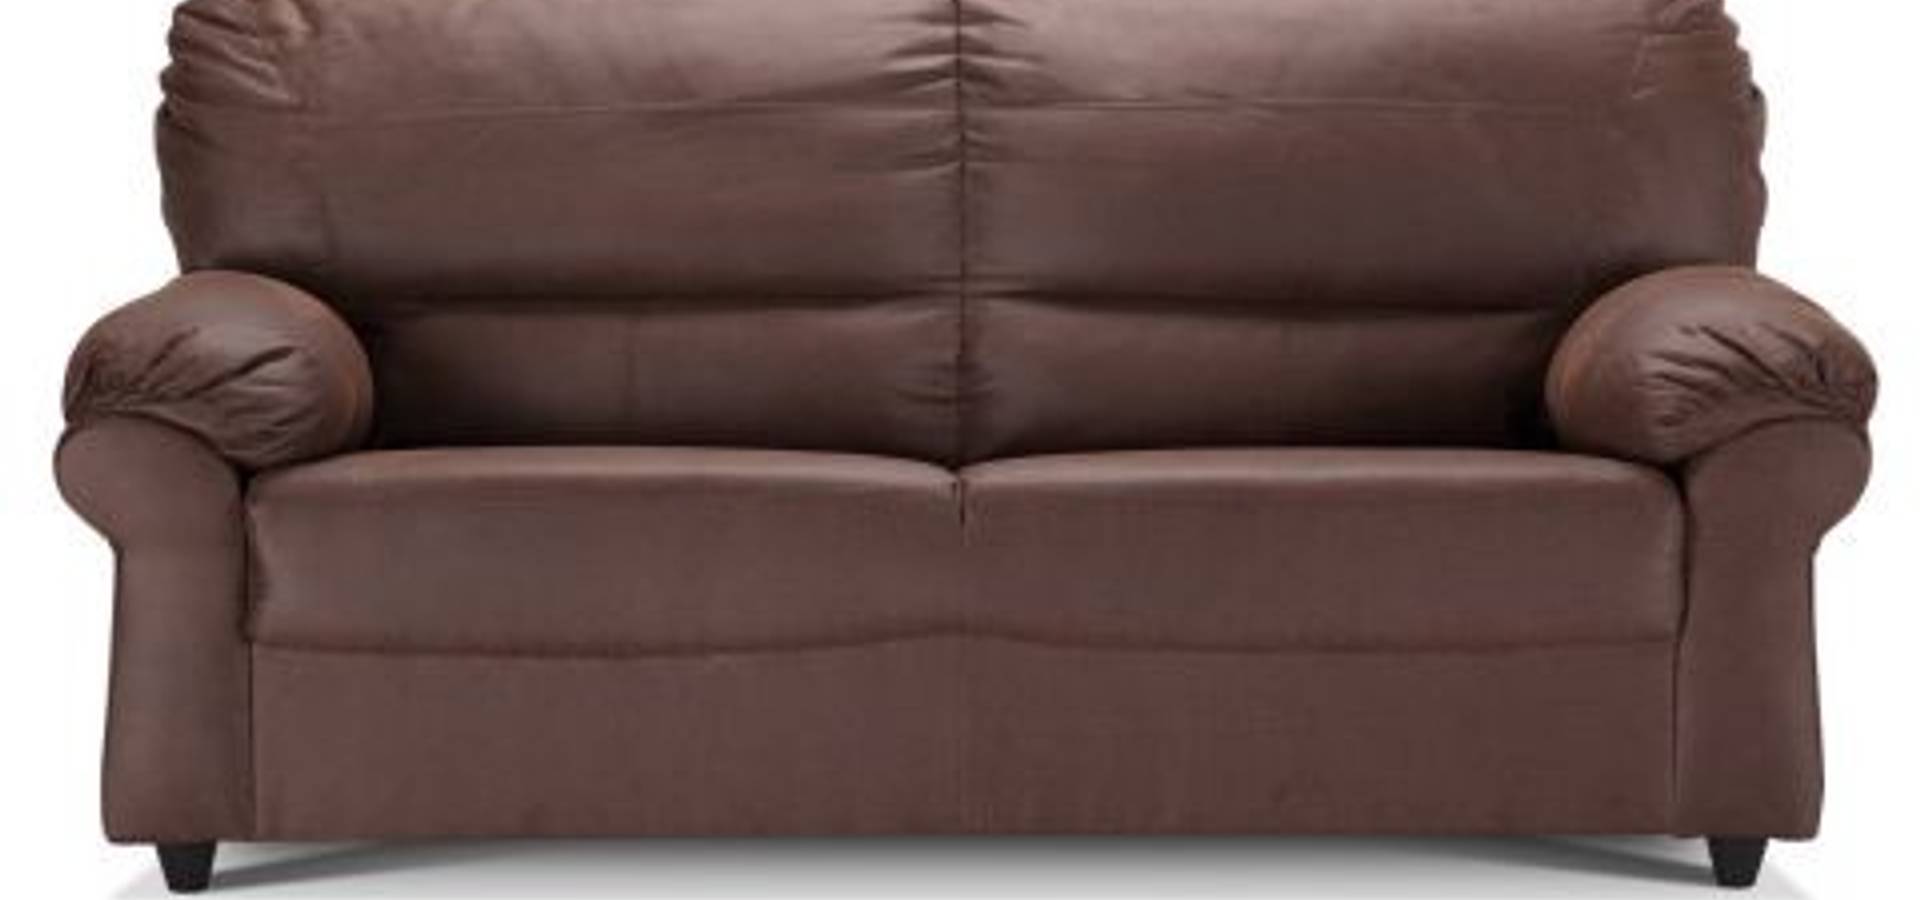 Cheap leather sofas ltd